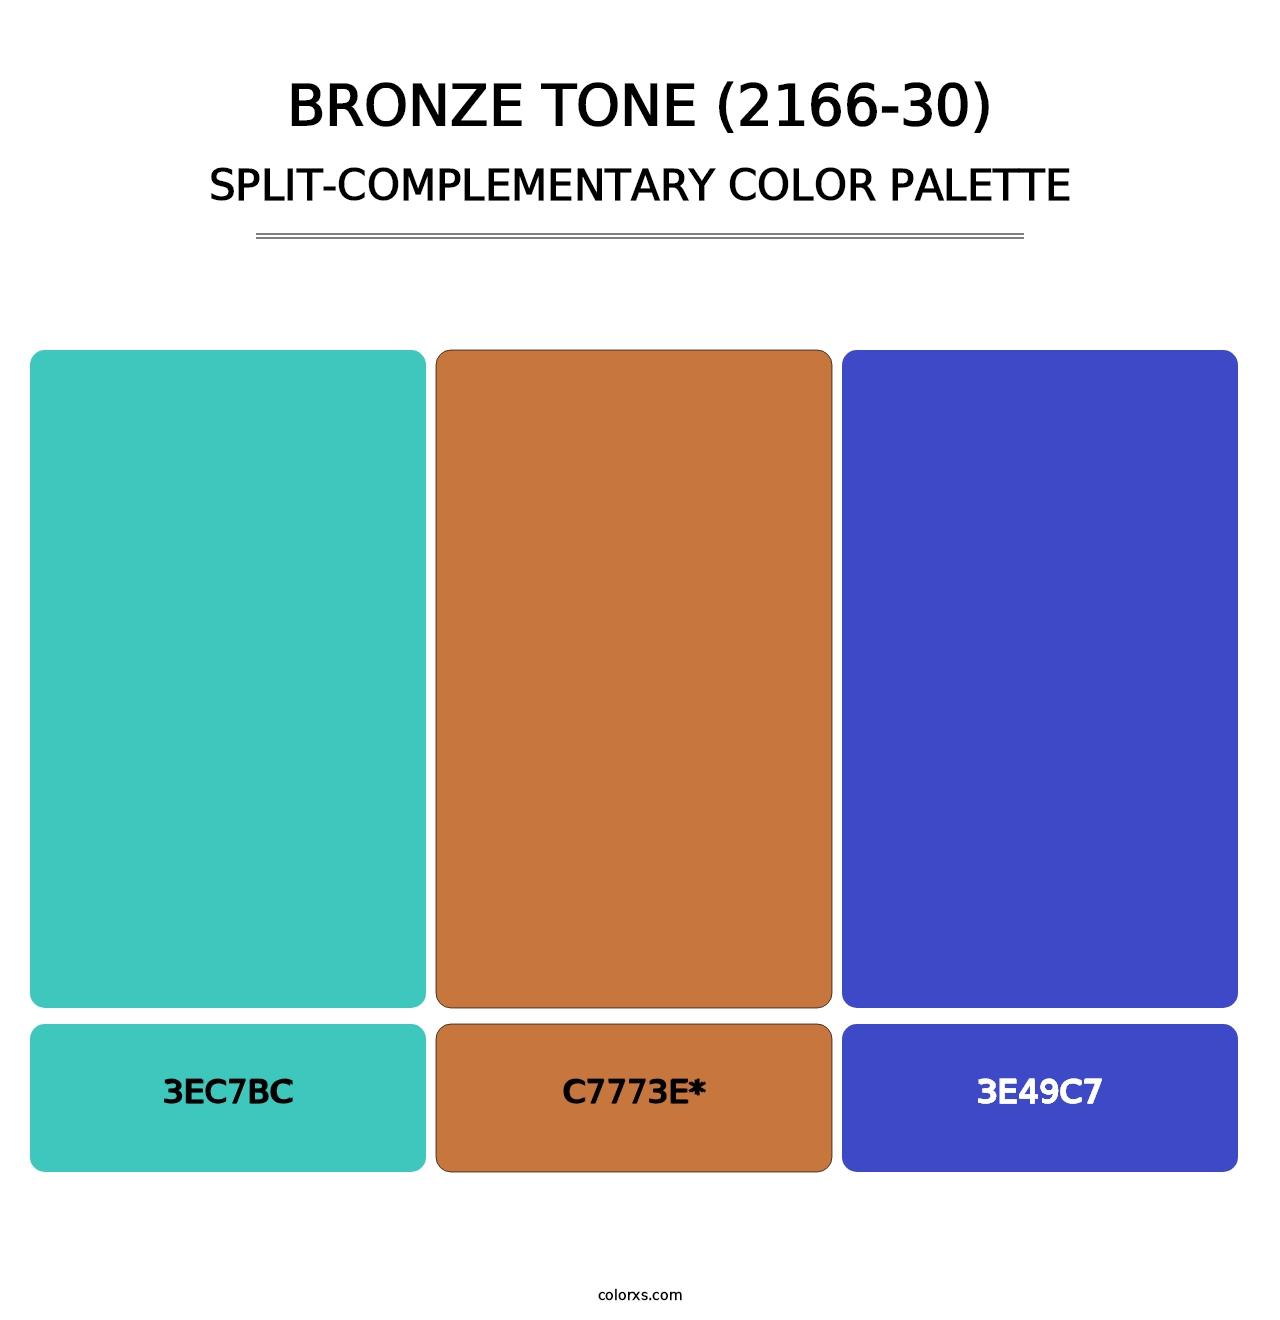 Bronze Tone (2166-30) - Split-Complementary Color Palette